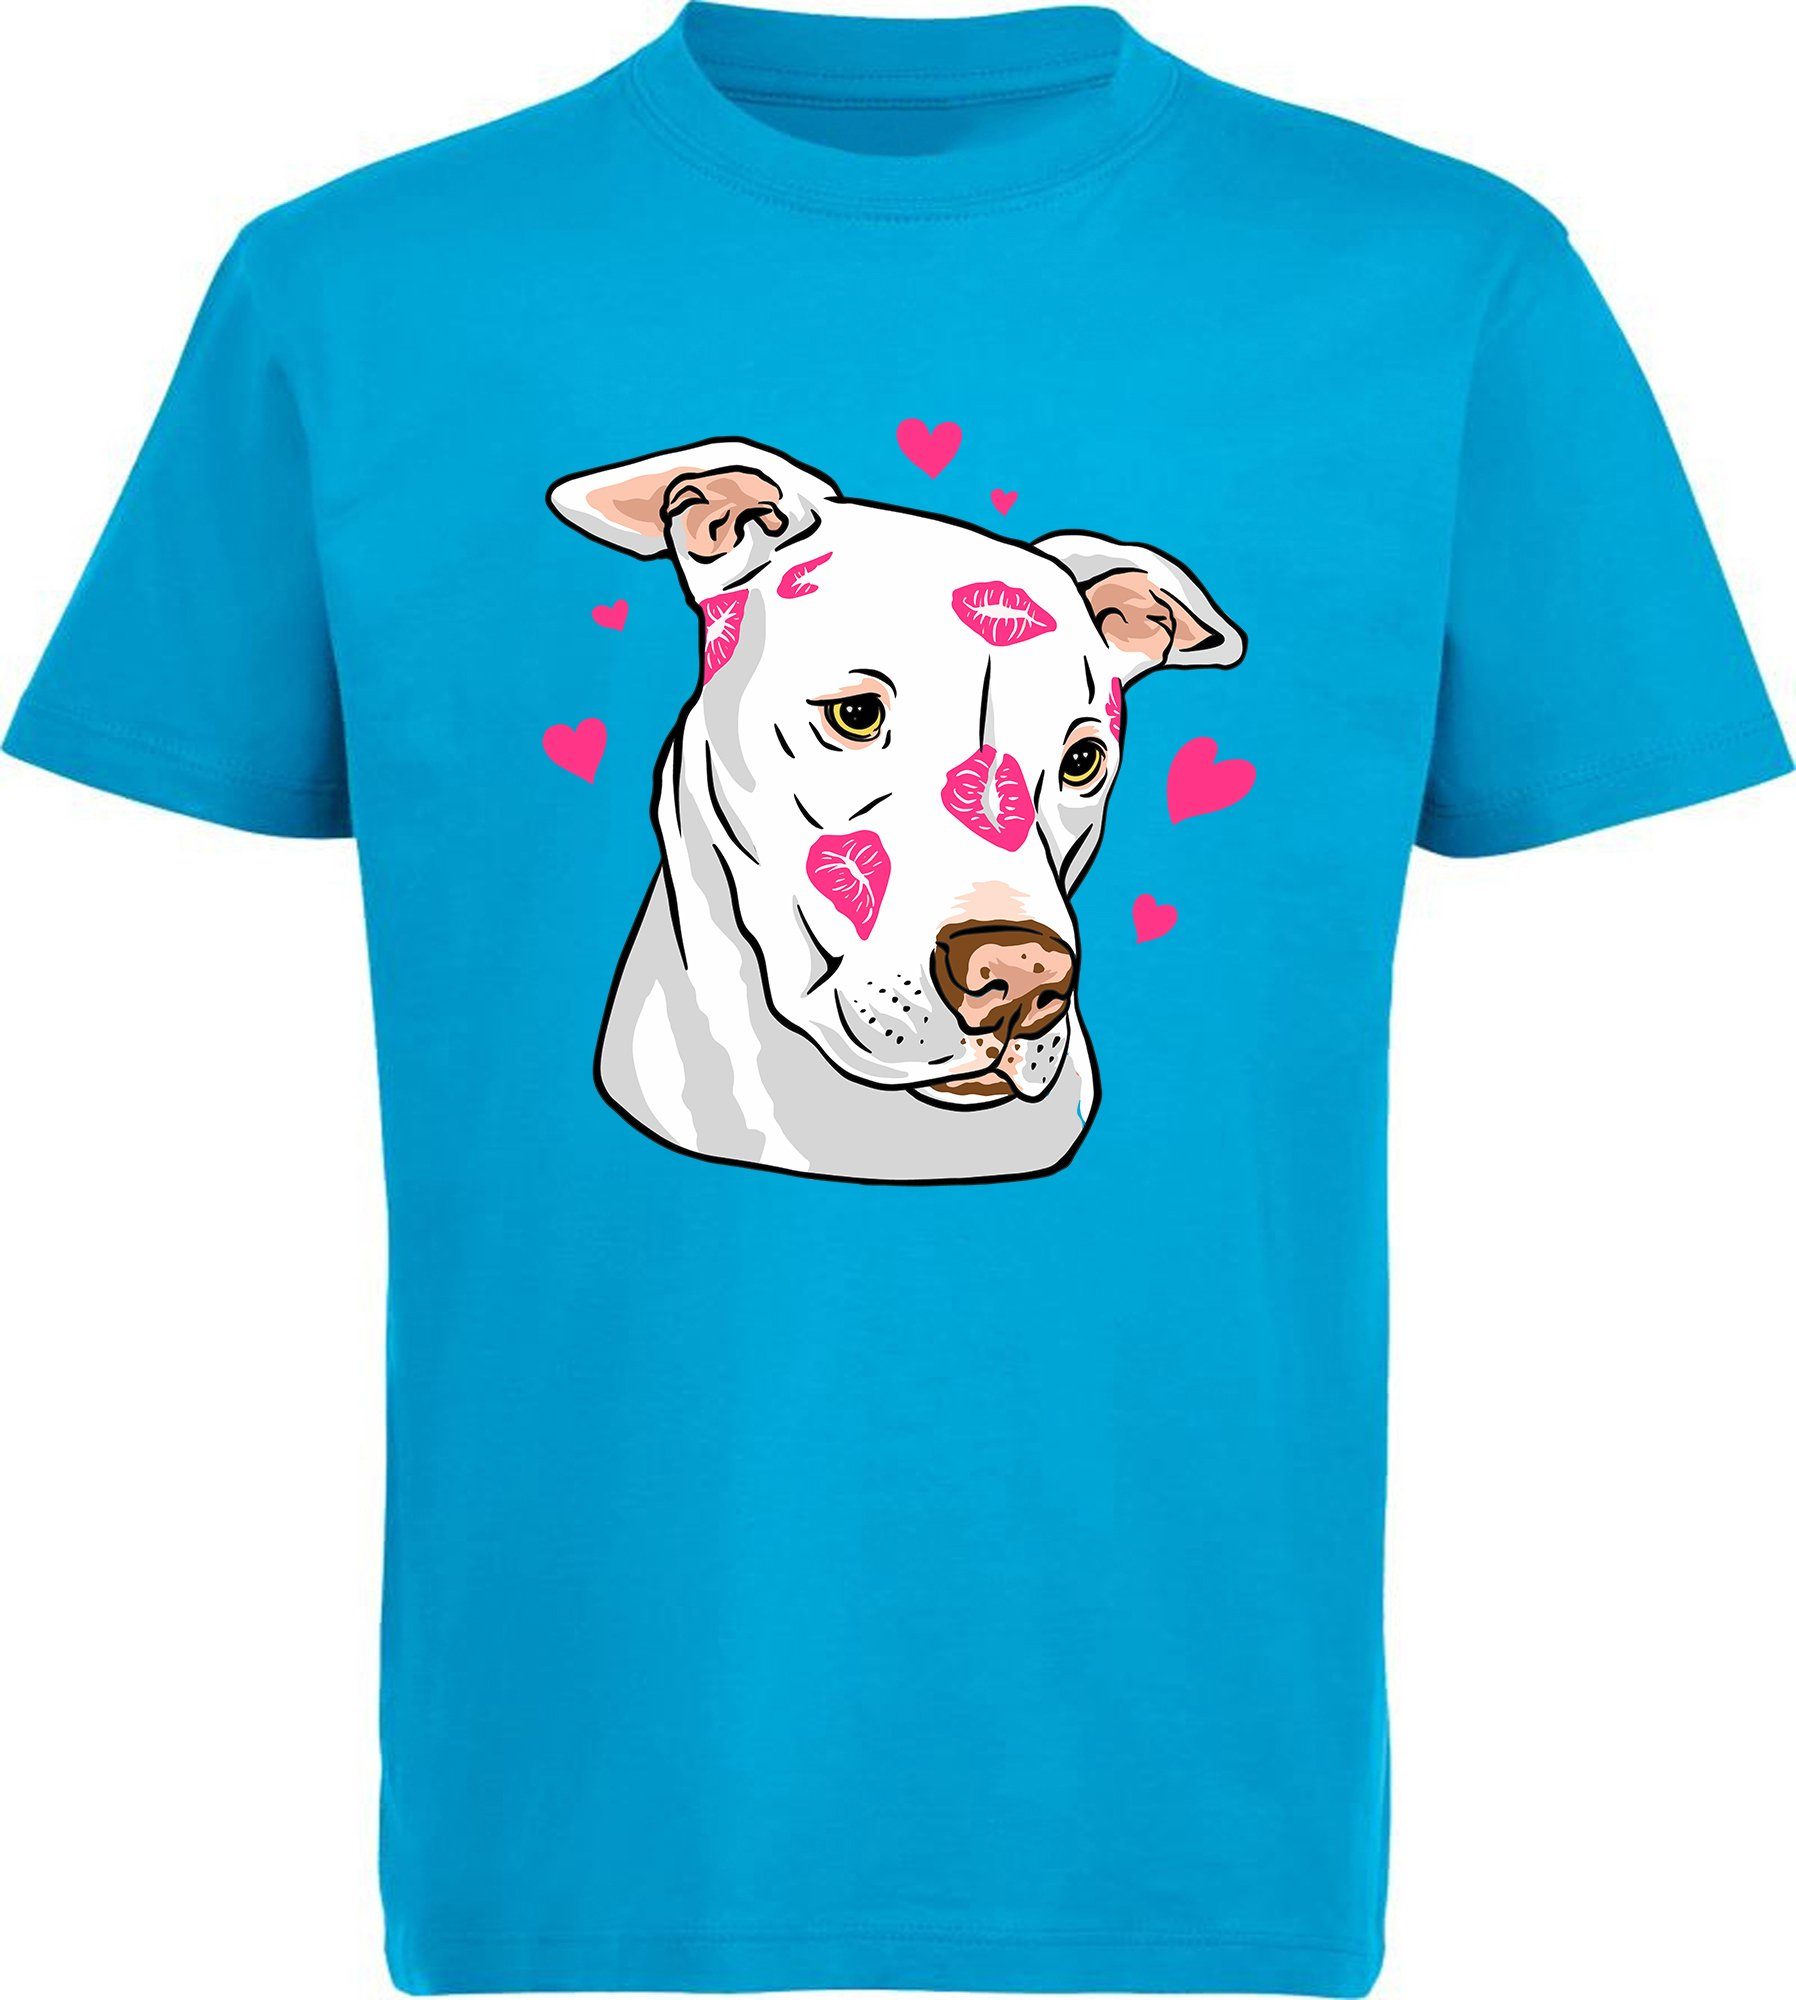 MyDesign24 Print-Shirt mit - Herzen Kinder bedrucktes Baumwollshirt T-Shirt blau Aufdruck, Pitbull aqua i229 mit Hunde